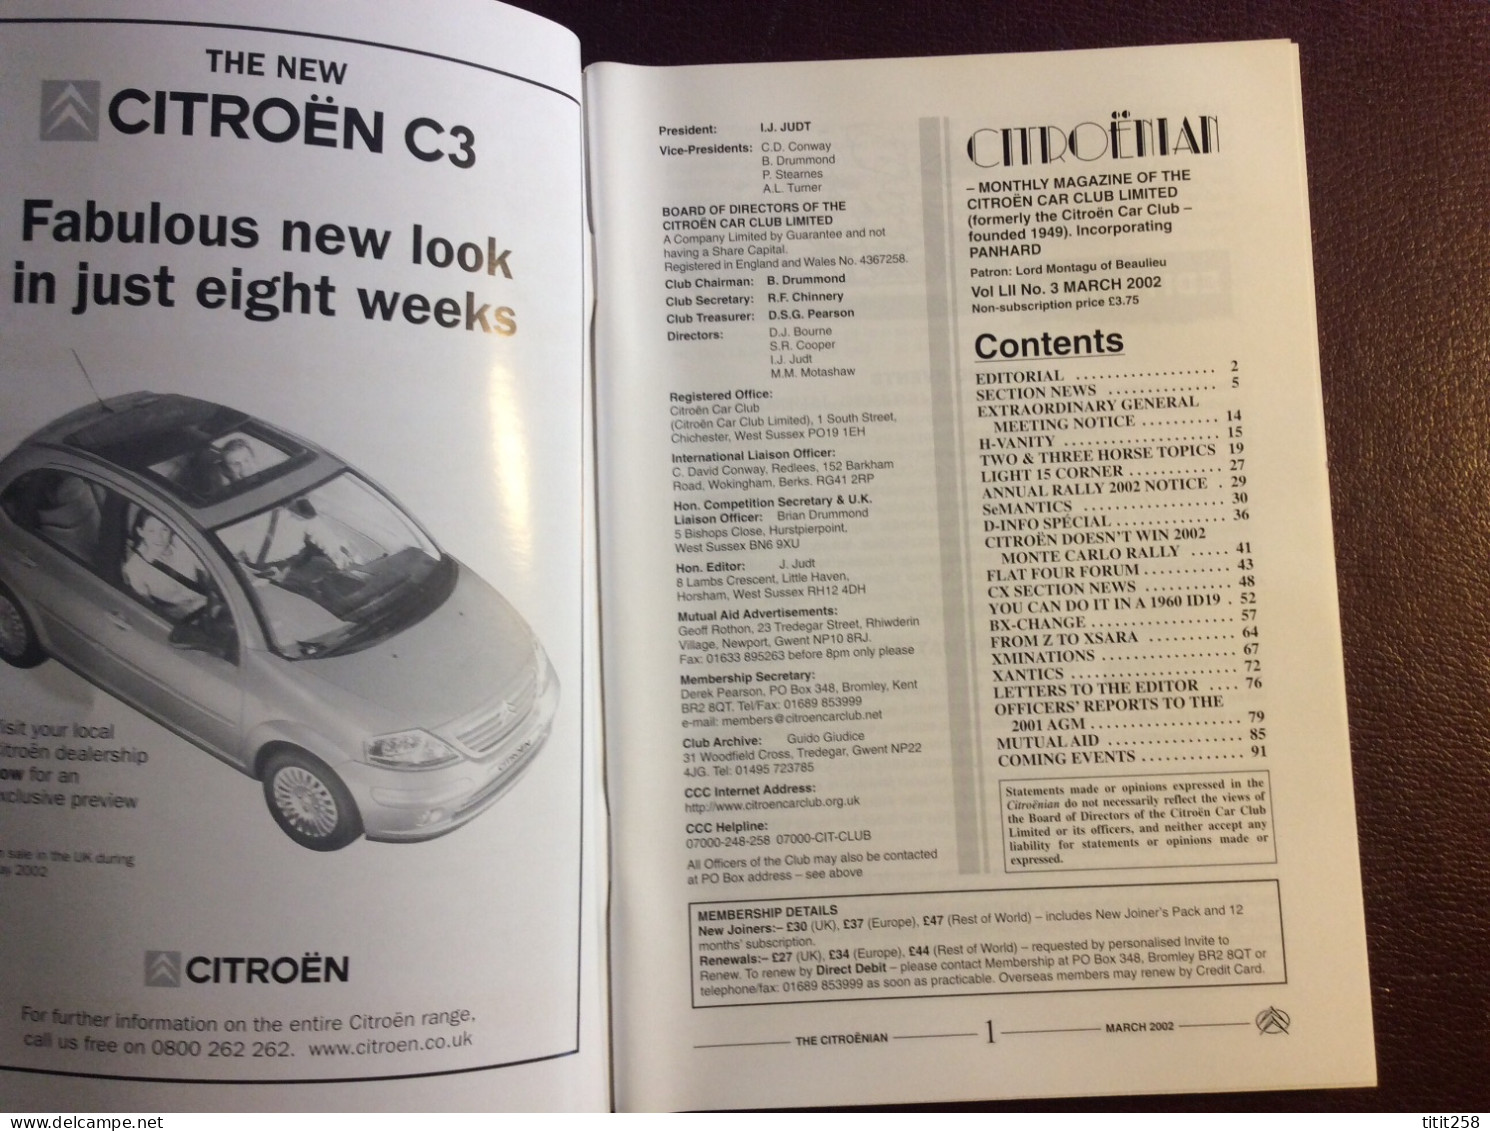 CITROENIAN Citroén Car Club Magazine Automobiles Citroén   . March Mars 2002 - Transport